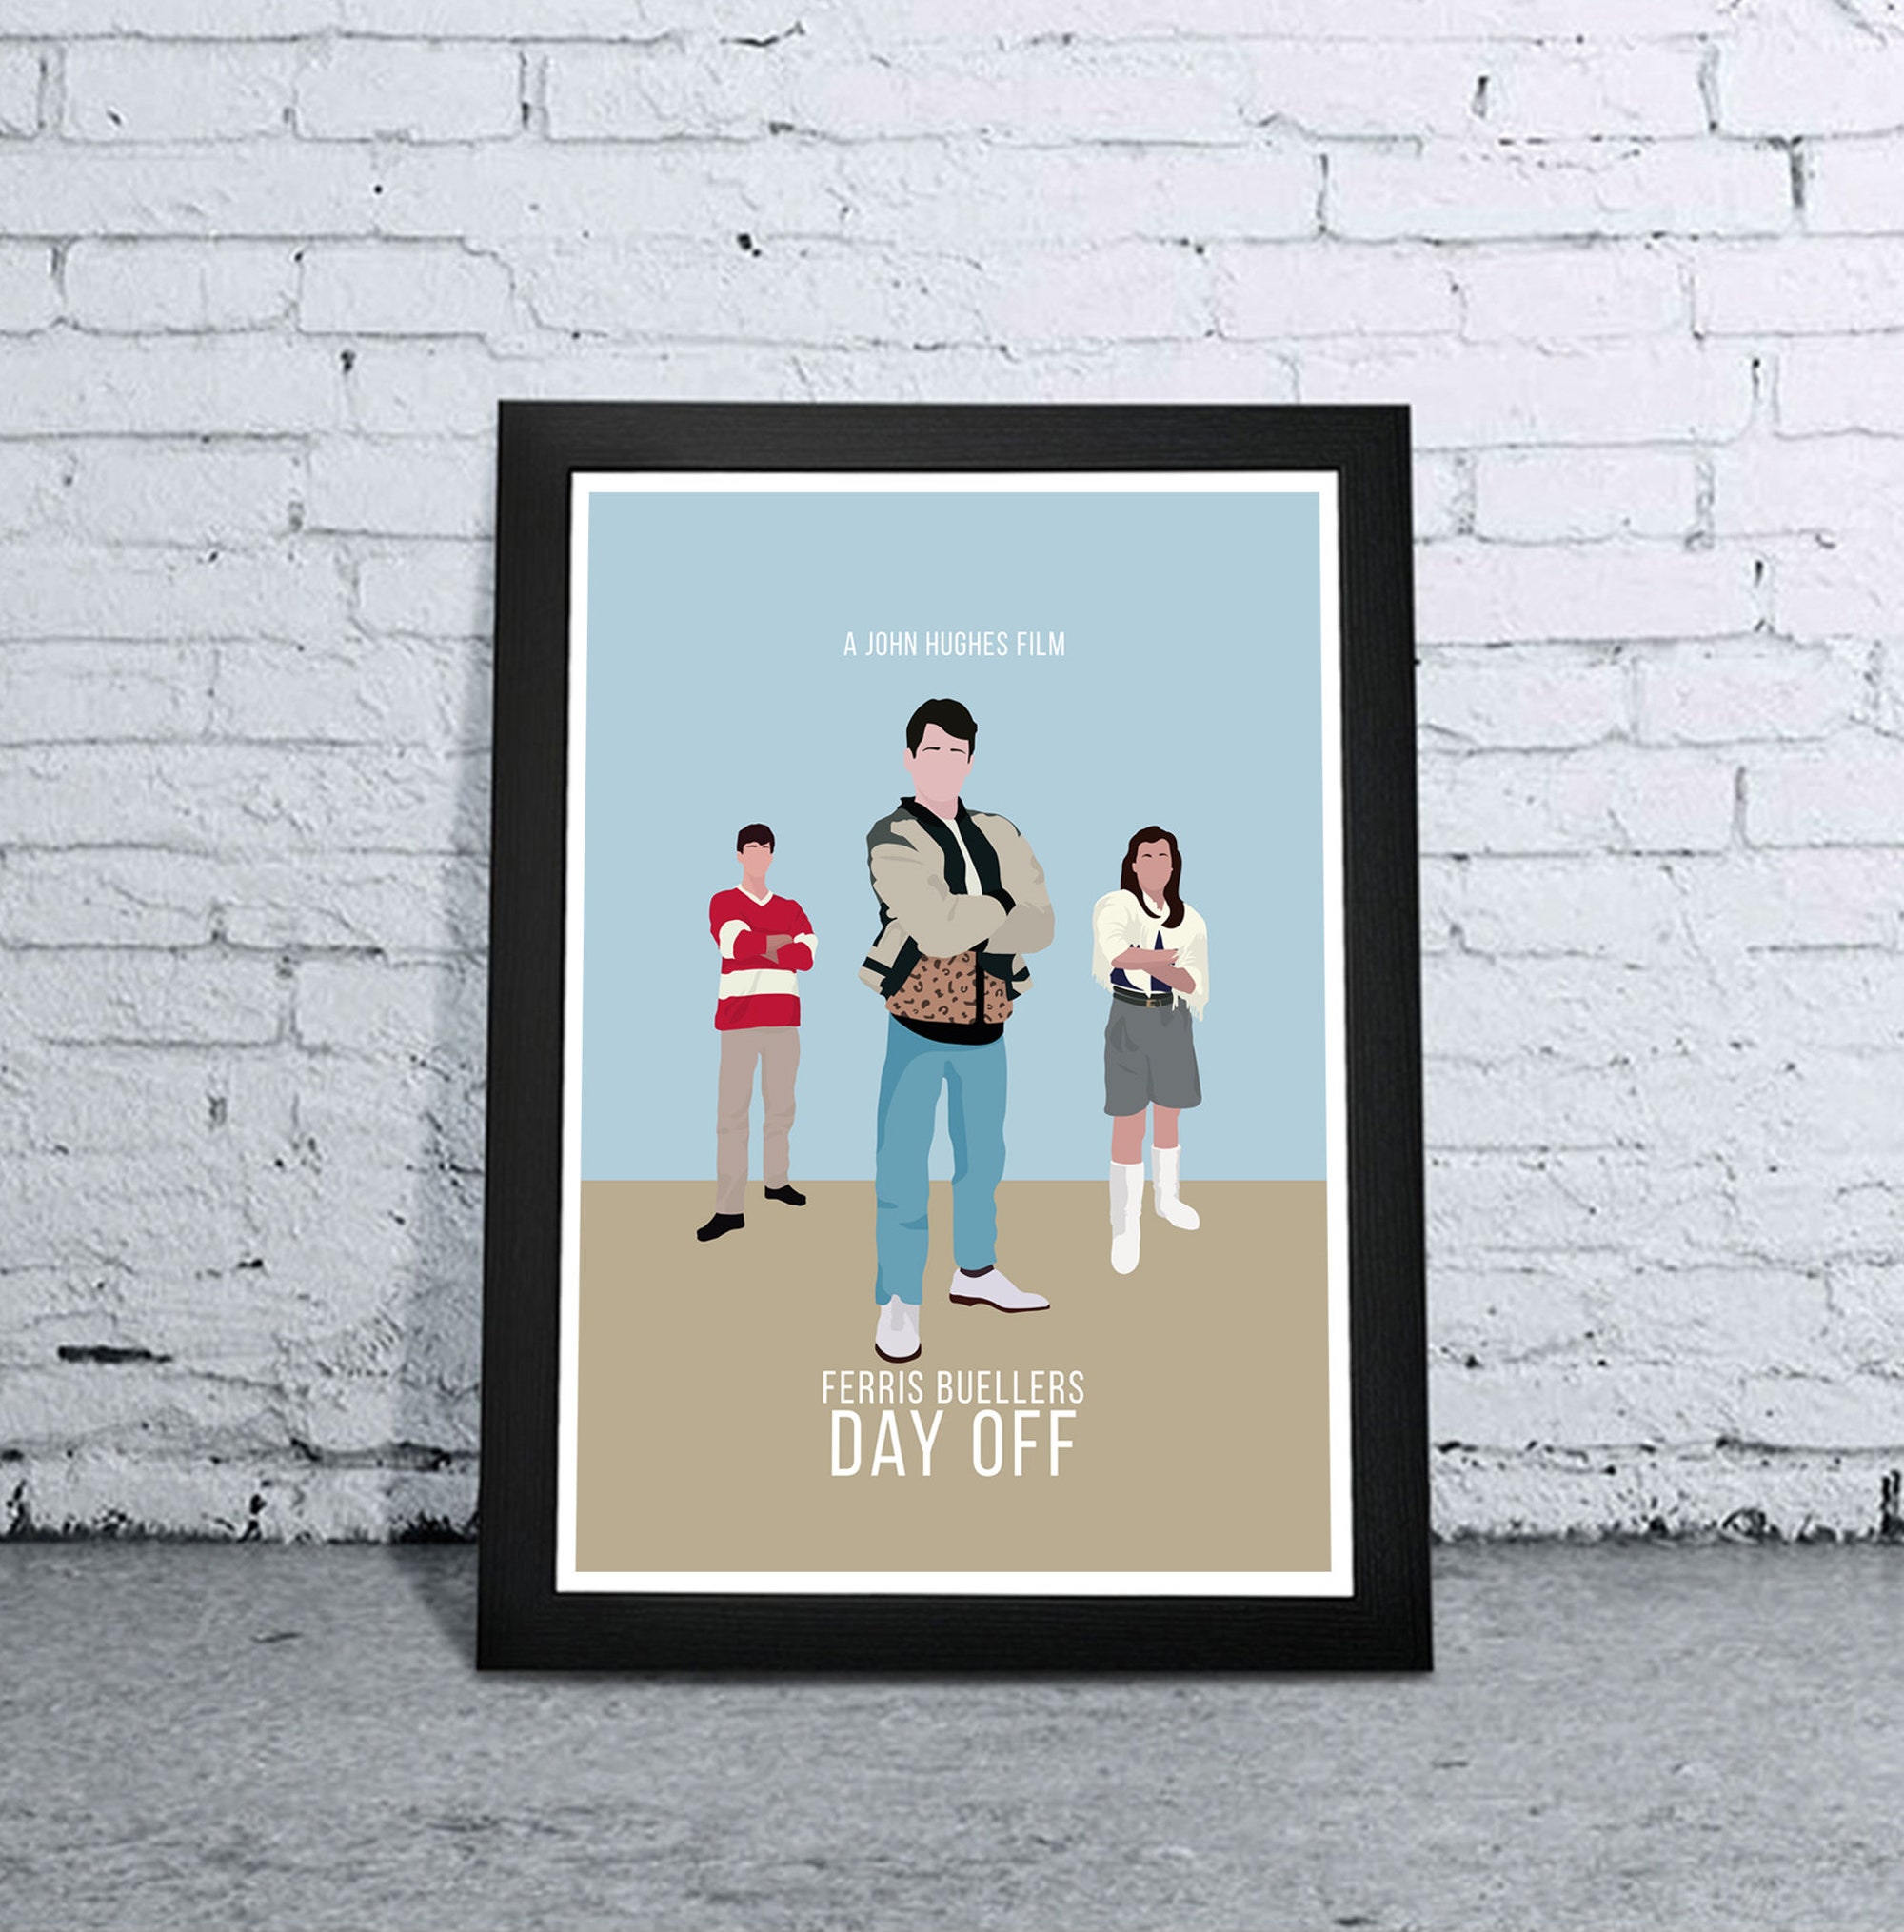 Ferris Bueller's Day Off Movie Poster, Ferris Bueller's Print, John Hughes